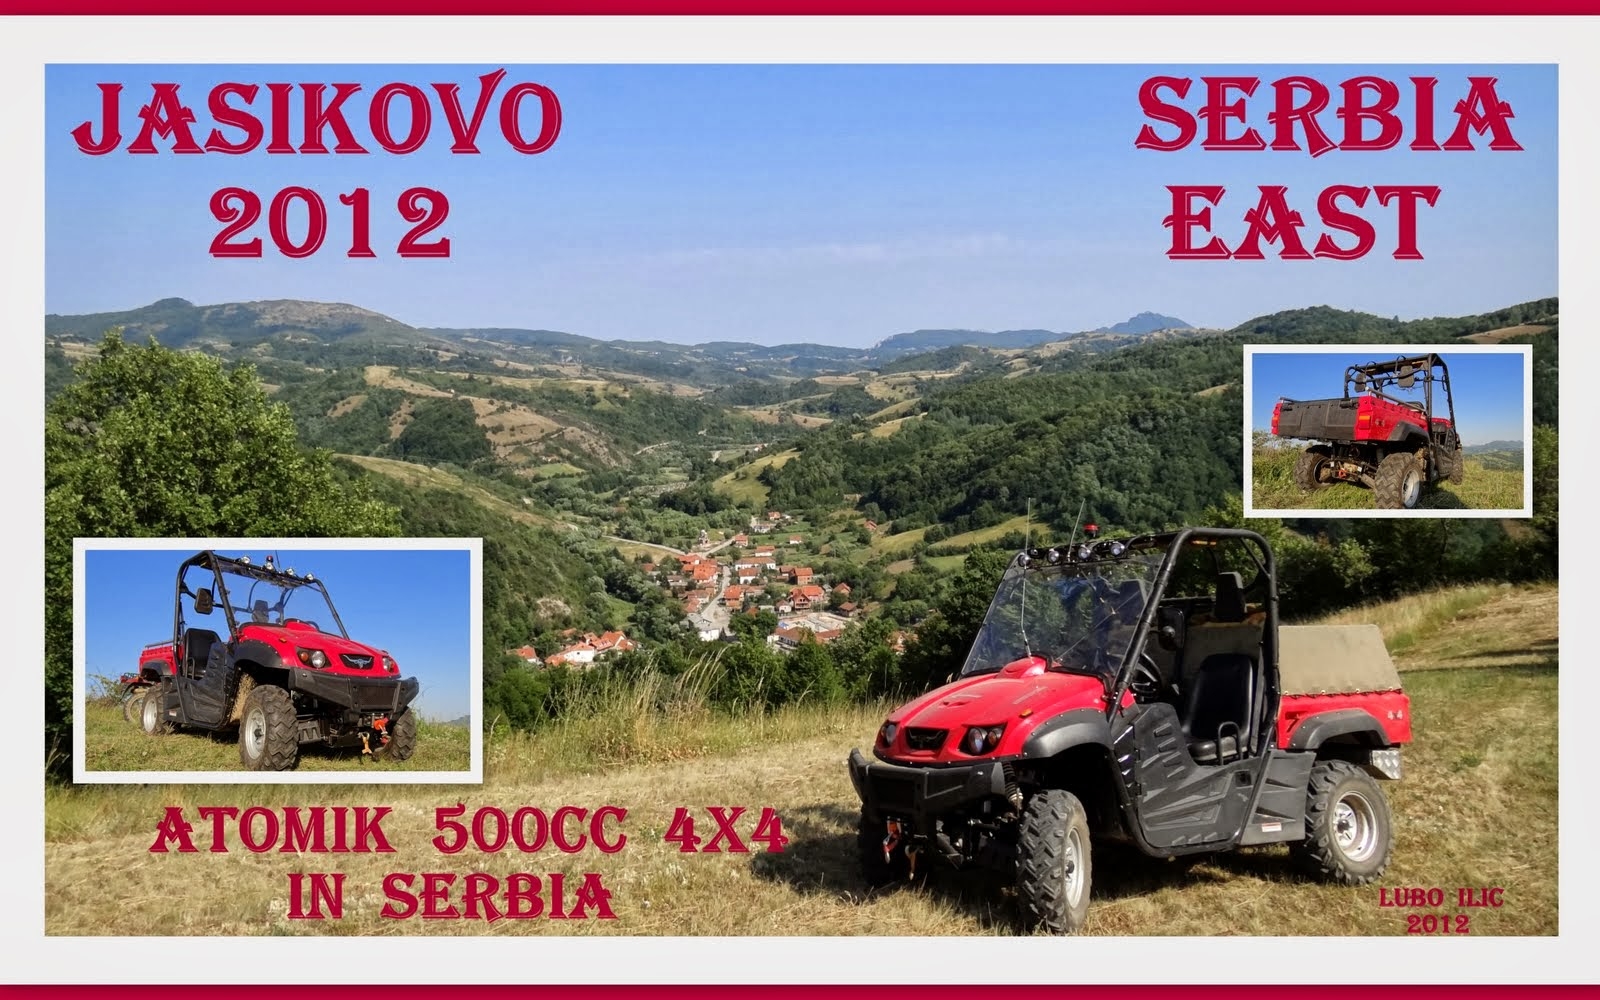 Atomik In East Serbia - Jasikovo 2012